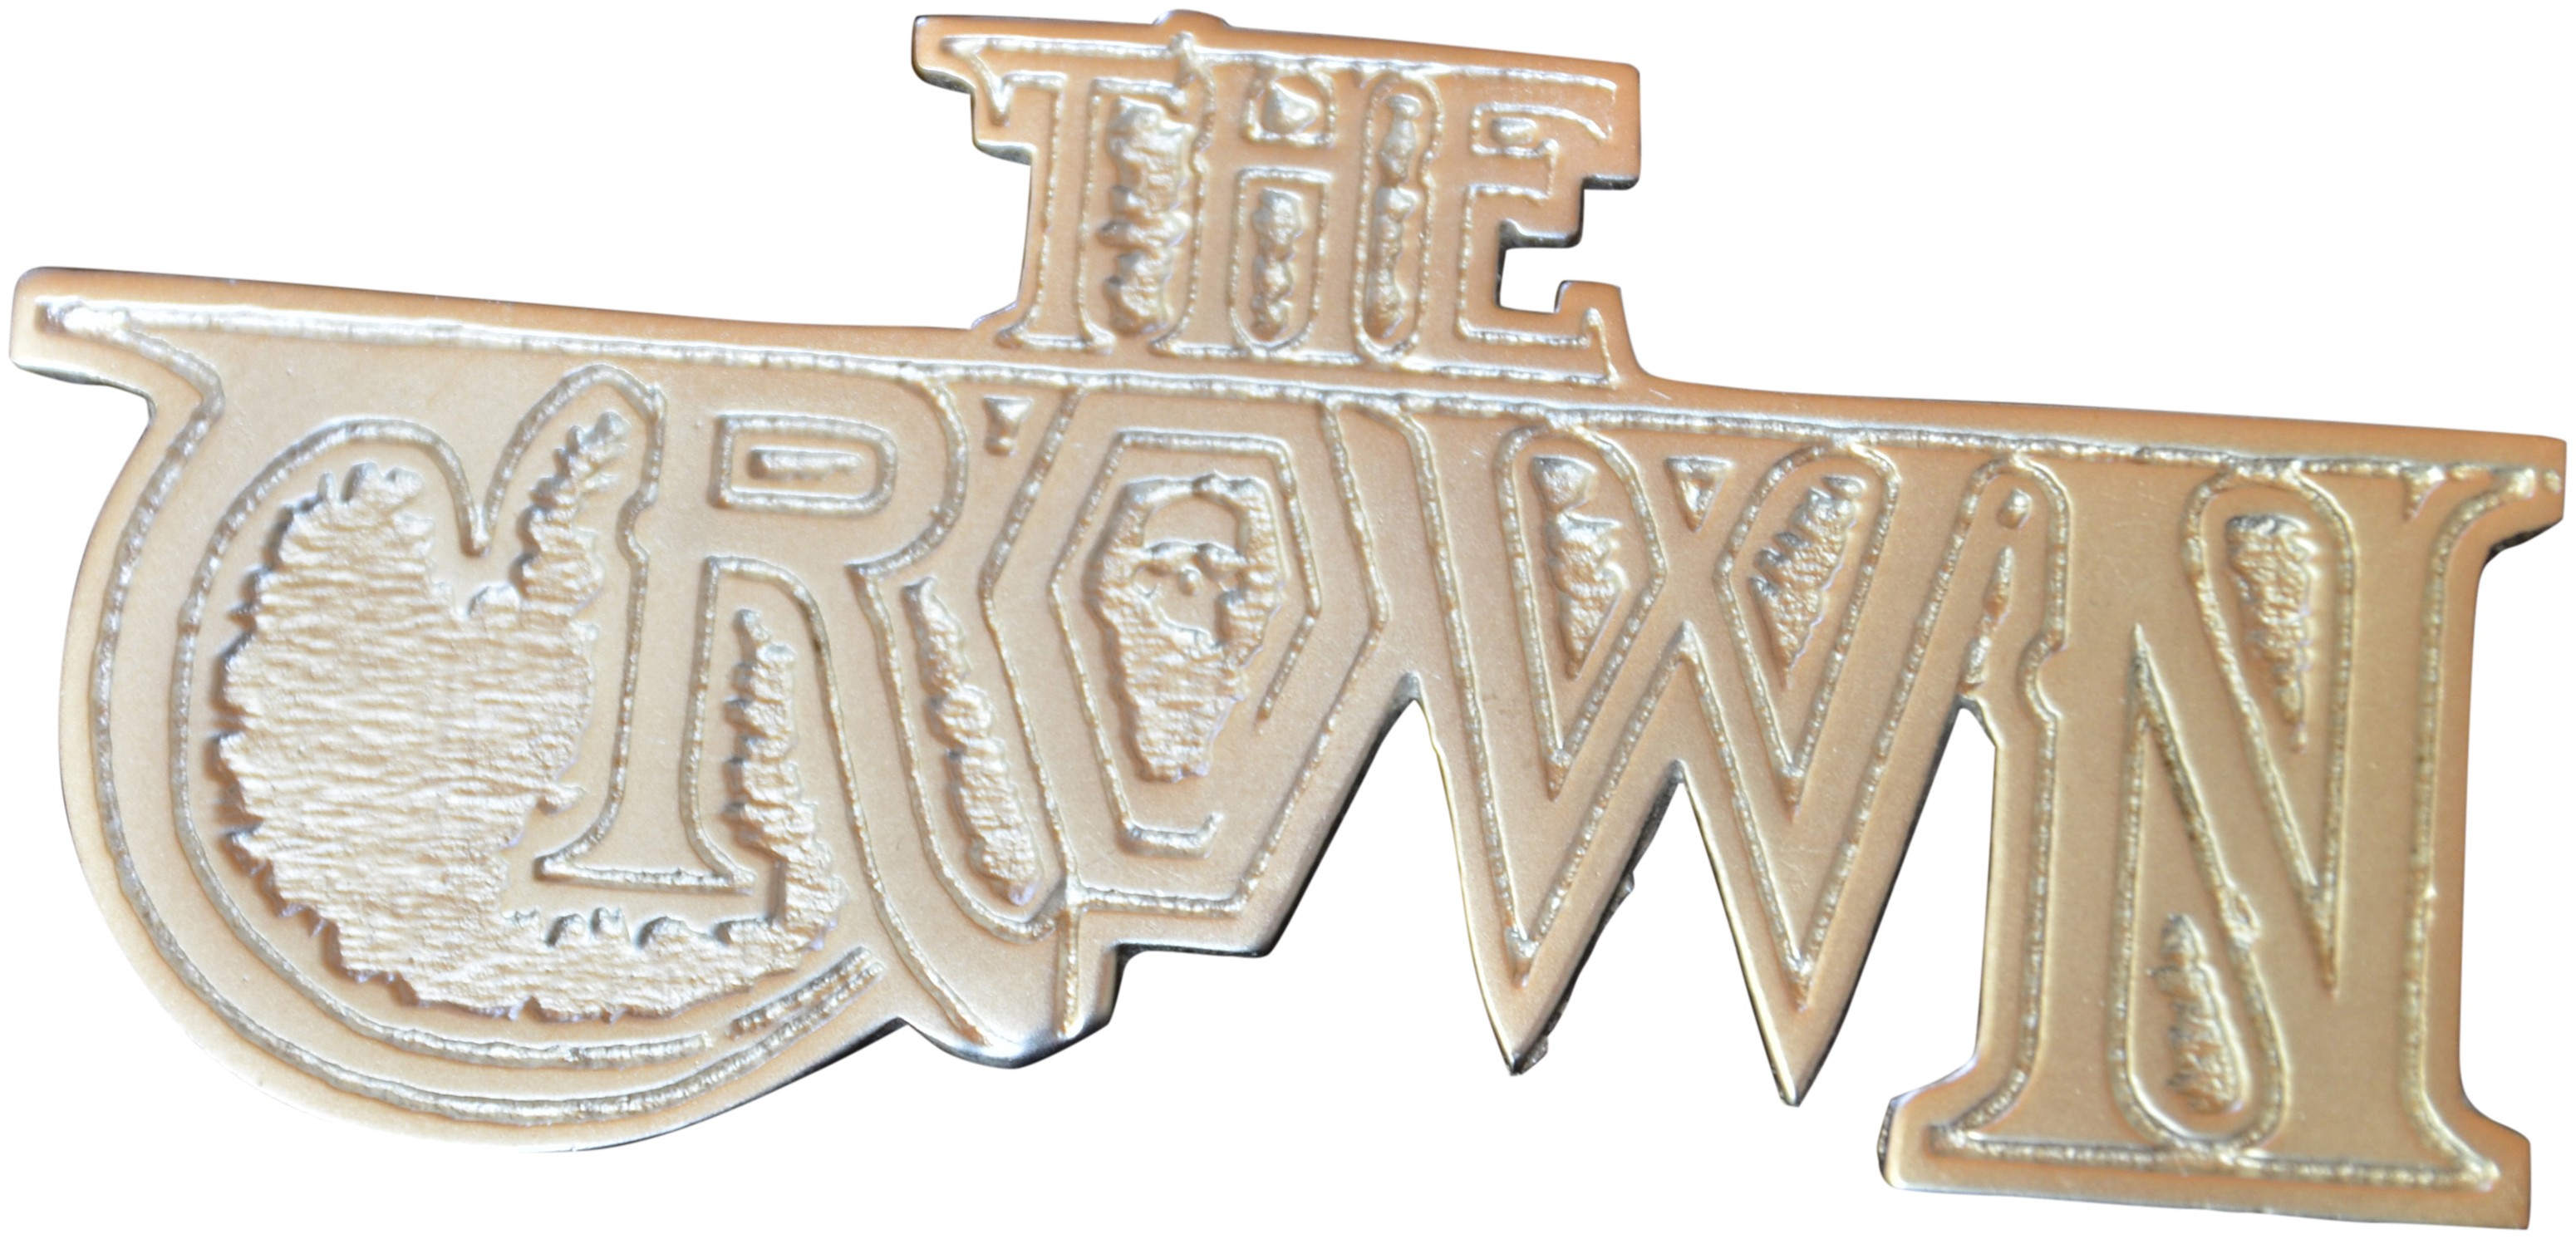 Crown, The - Logo